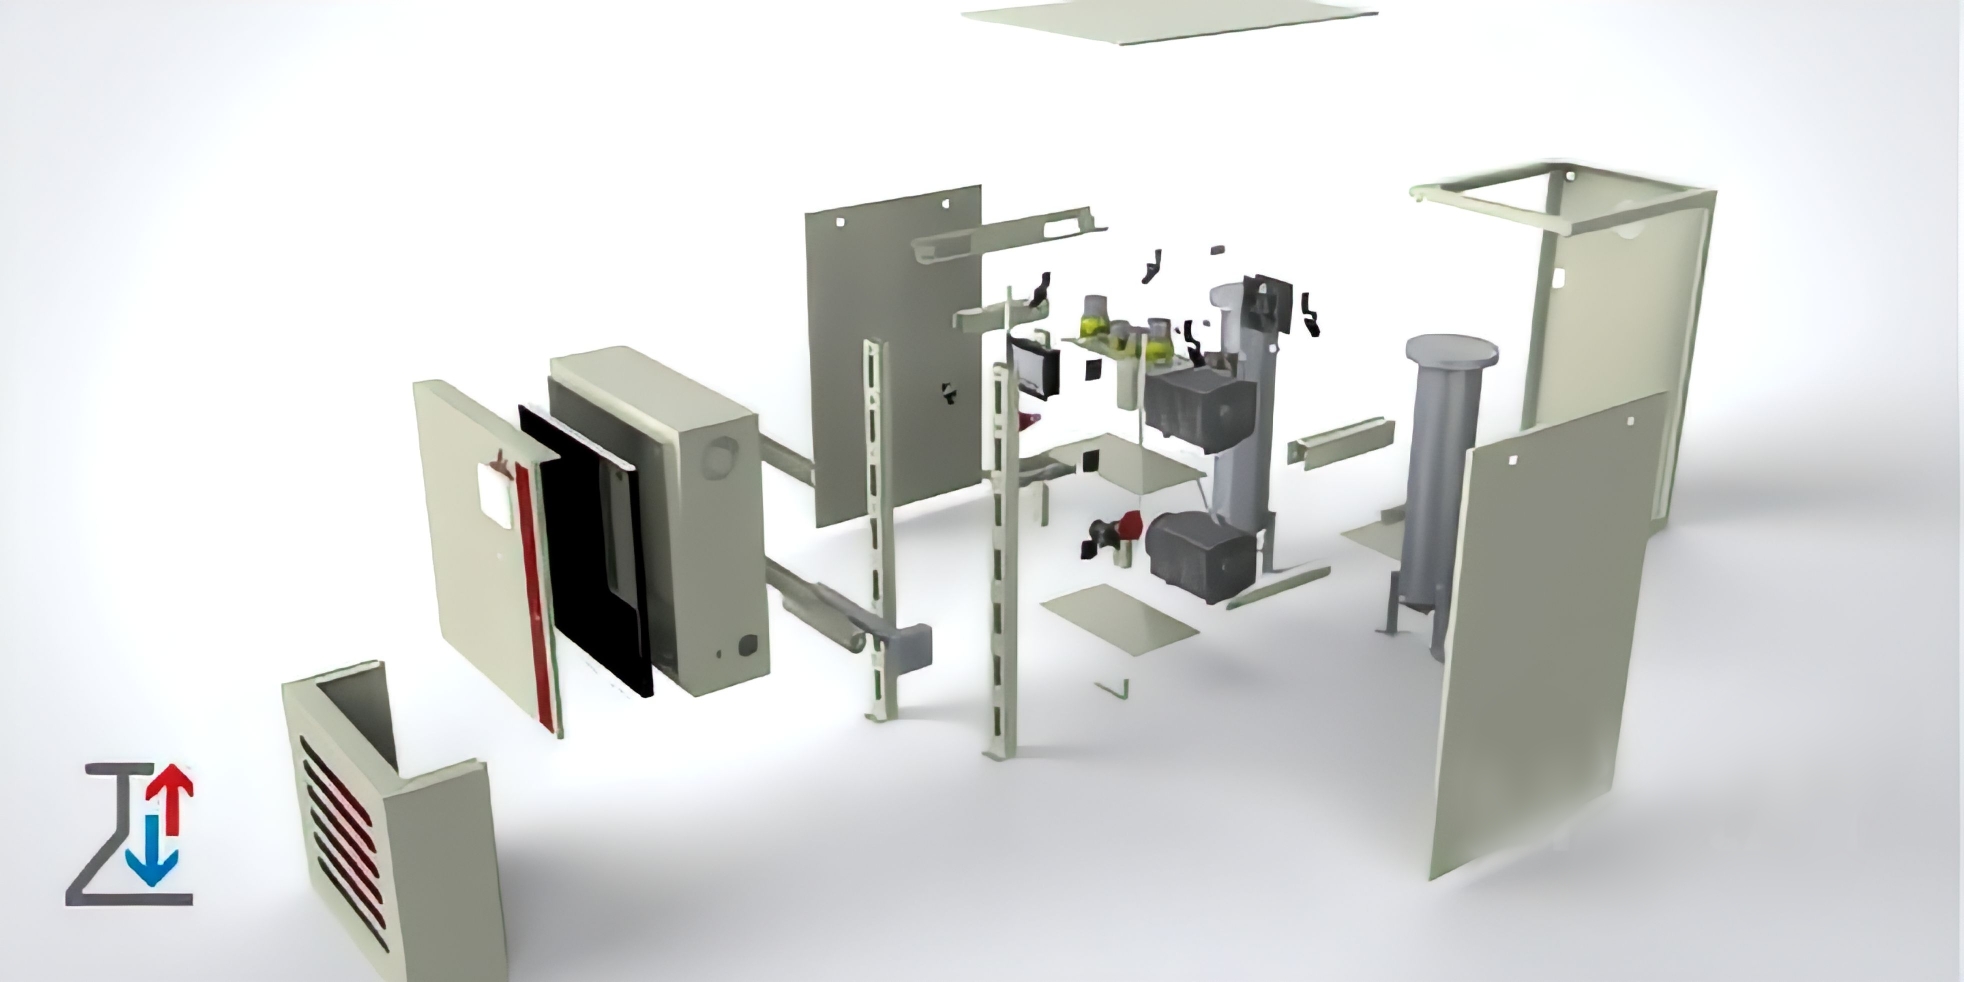 Industrial Dehumidifier System design